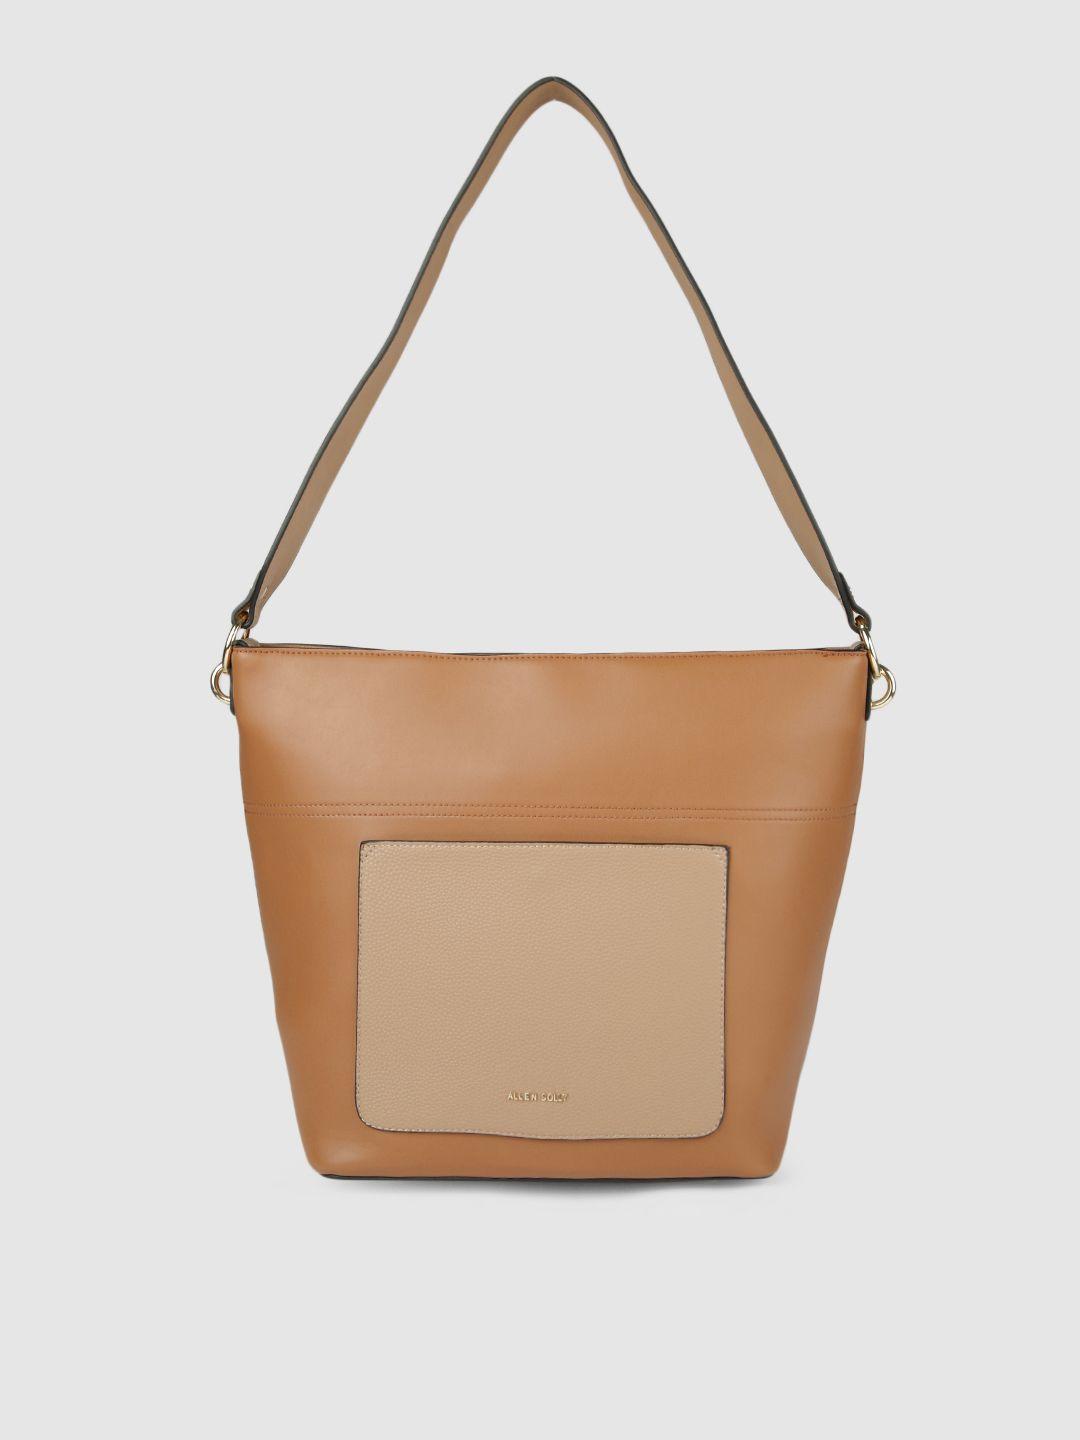 allen solly tan brown & beige colourblocked hobo bag